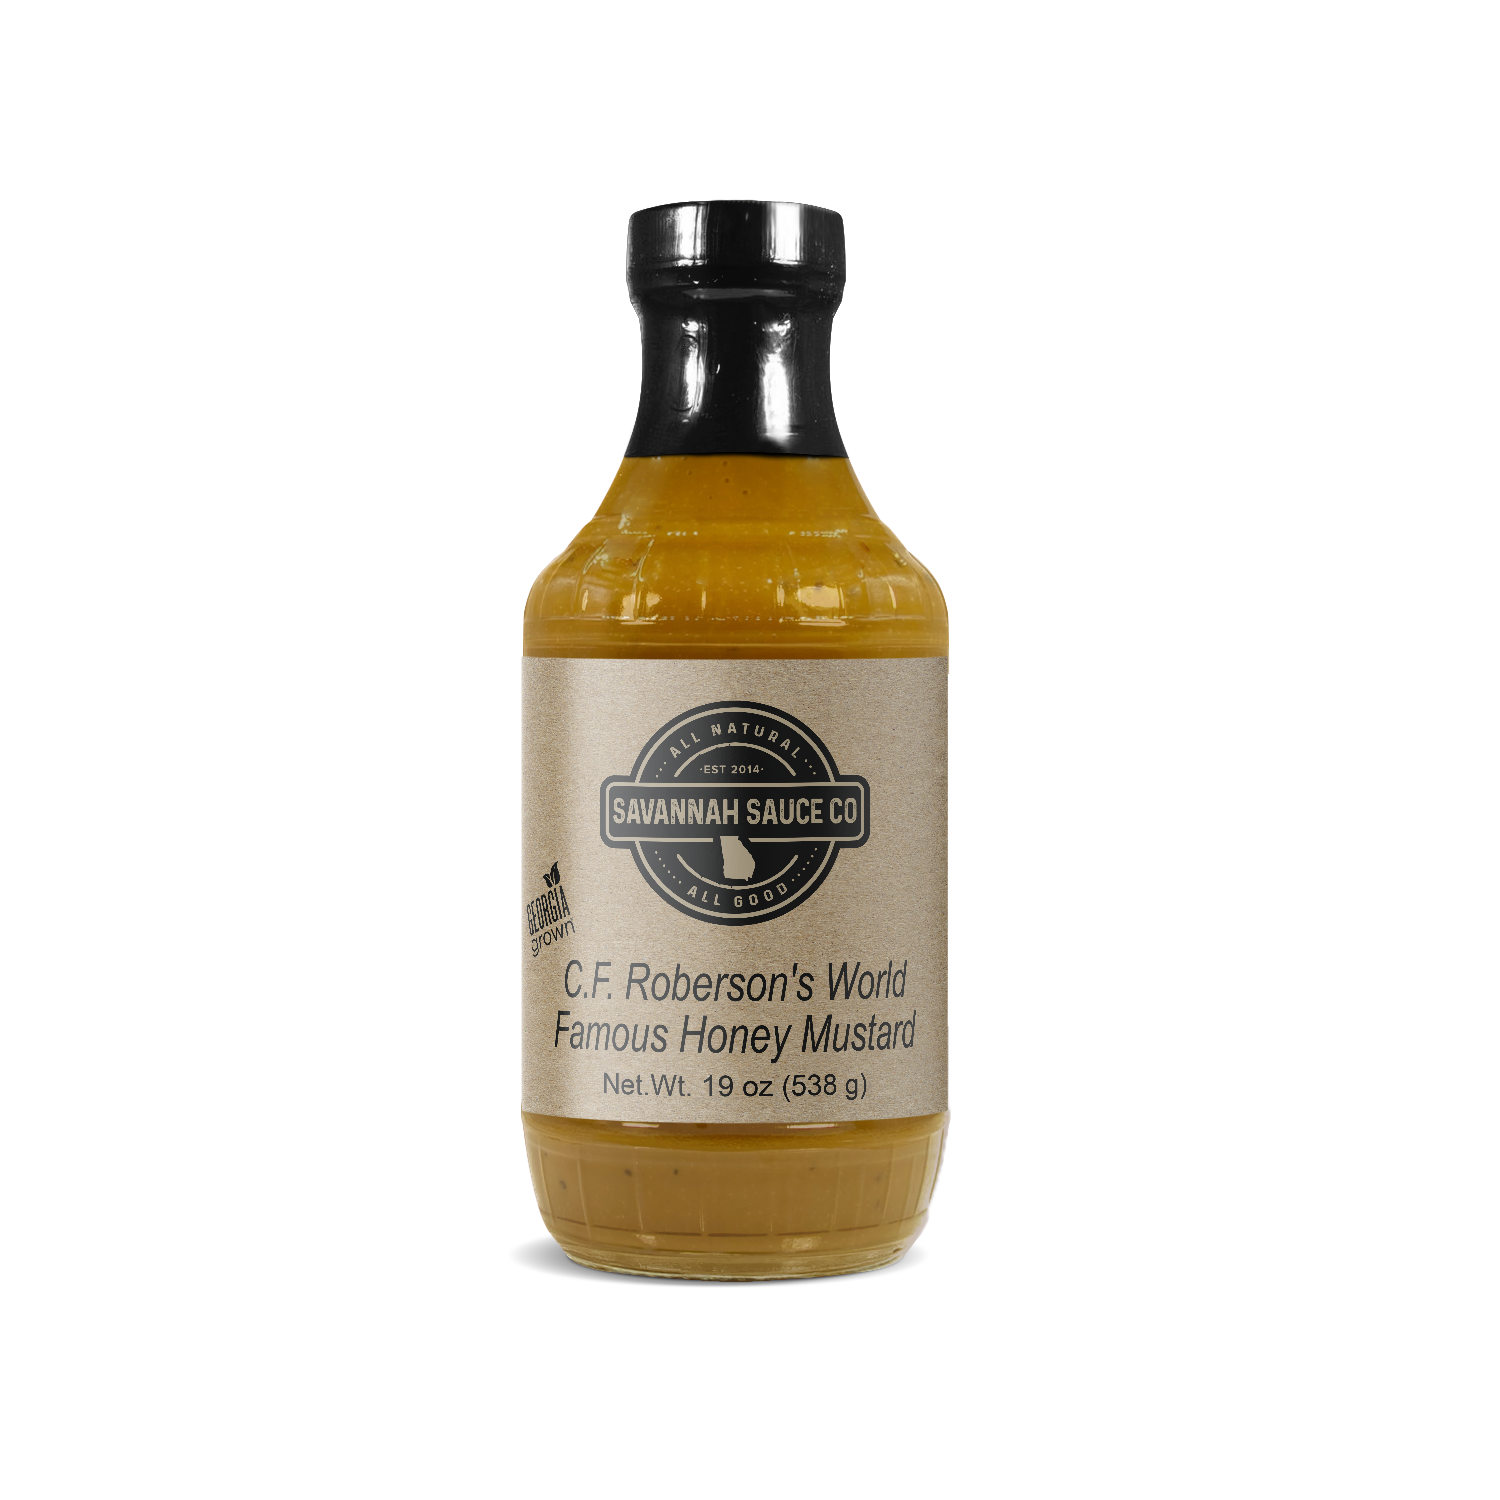 C.F. Roberson’s World Famous Honey Mustard